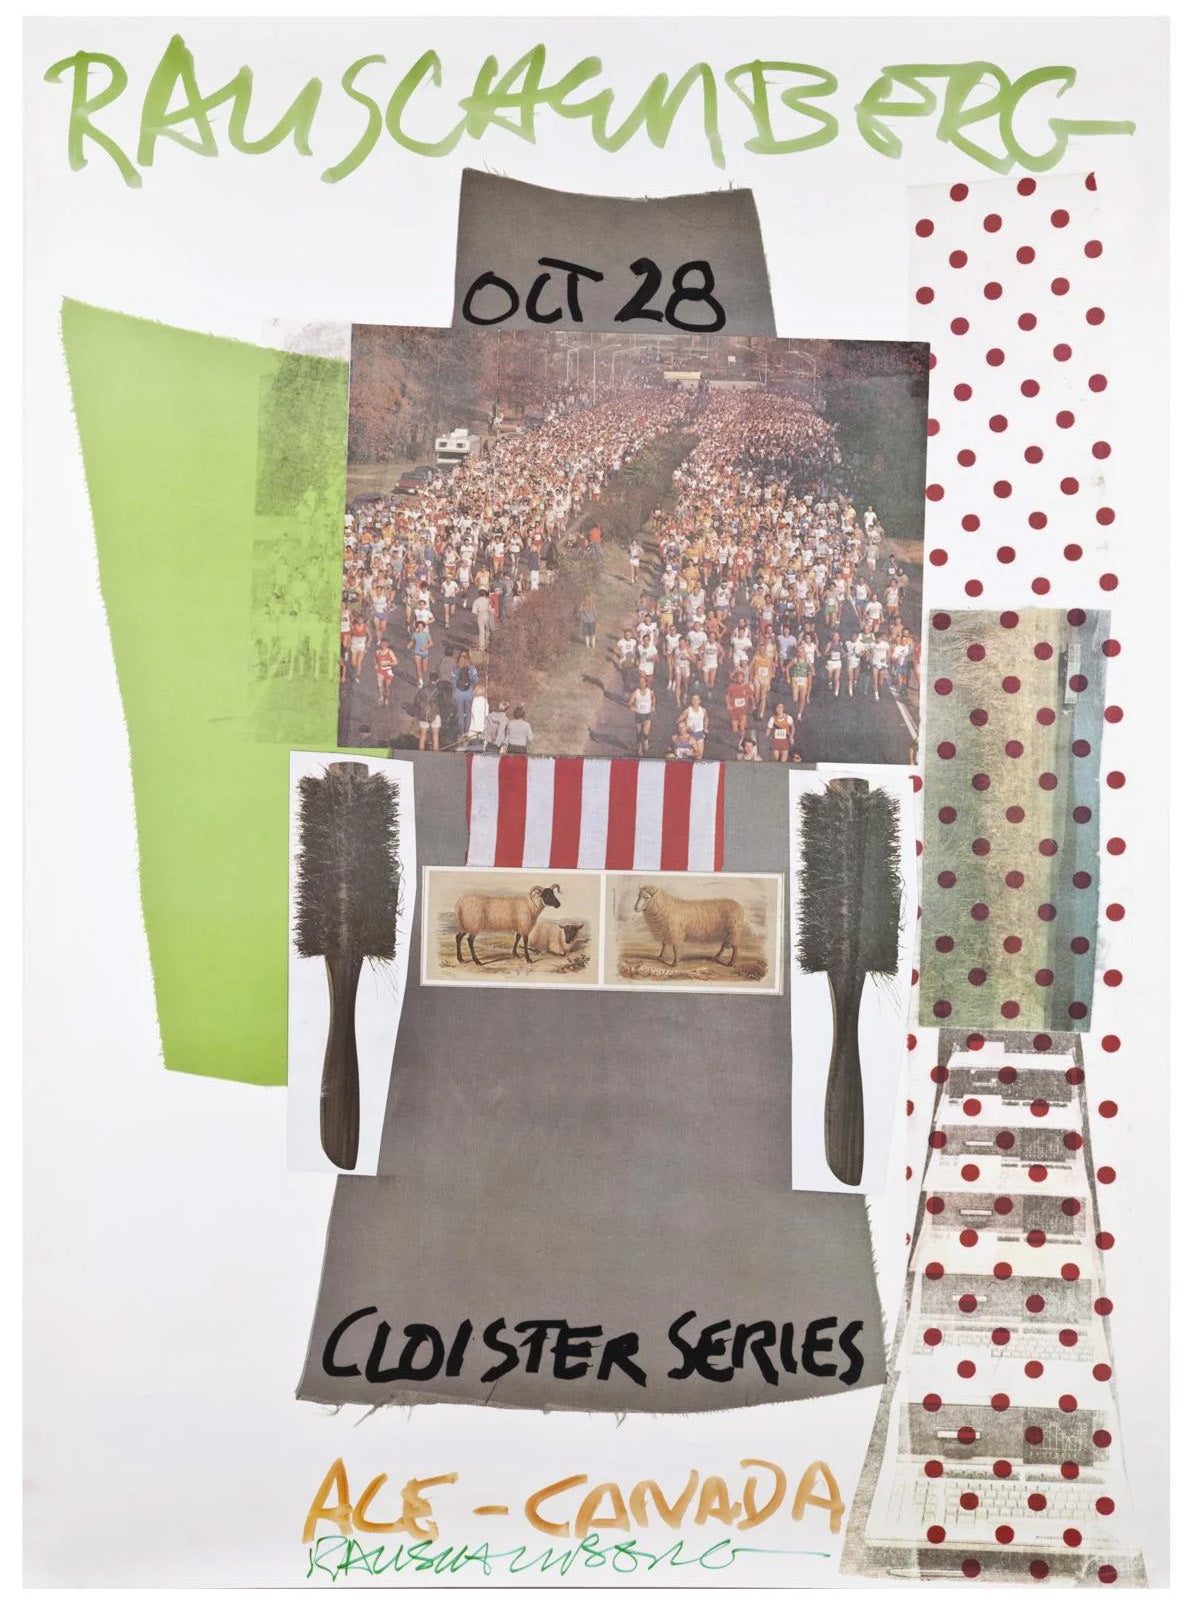 Robert Rauschenberg - Cloister Series - Signed Exhibition Poster